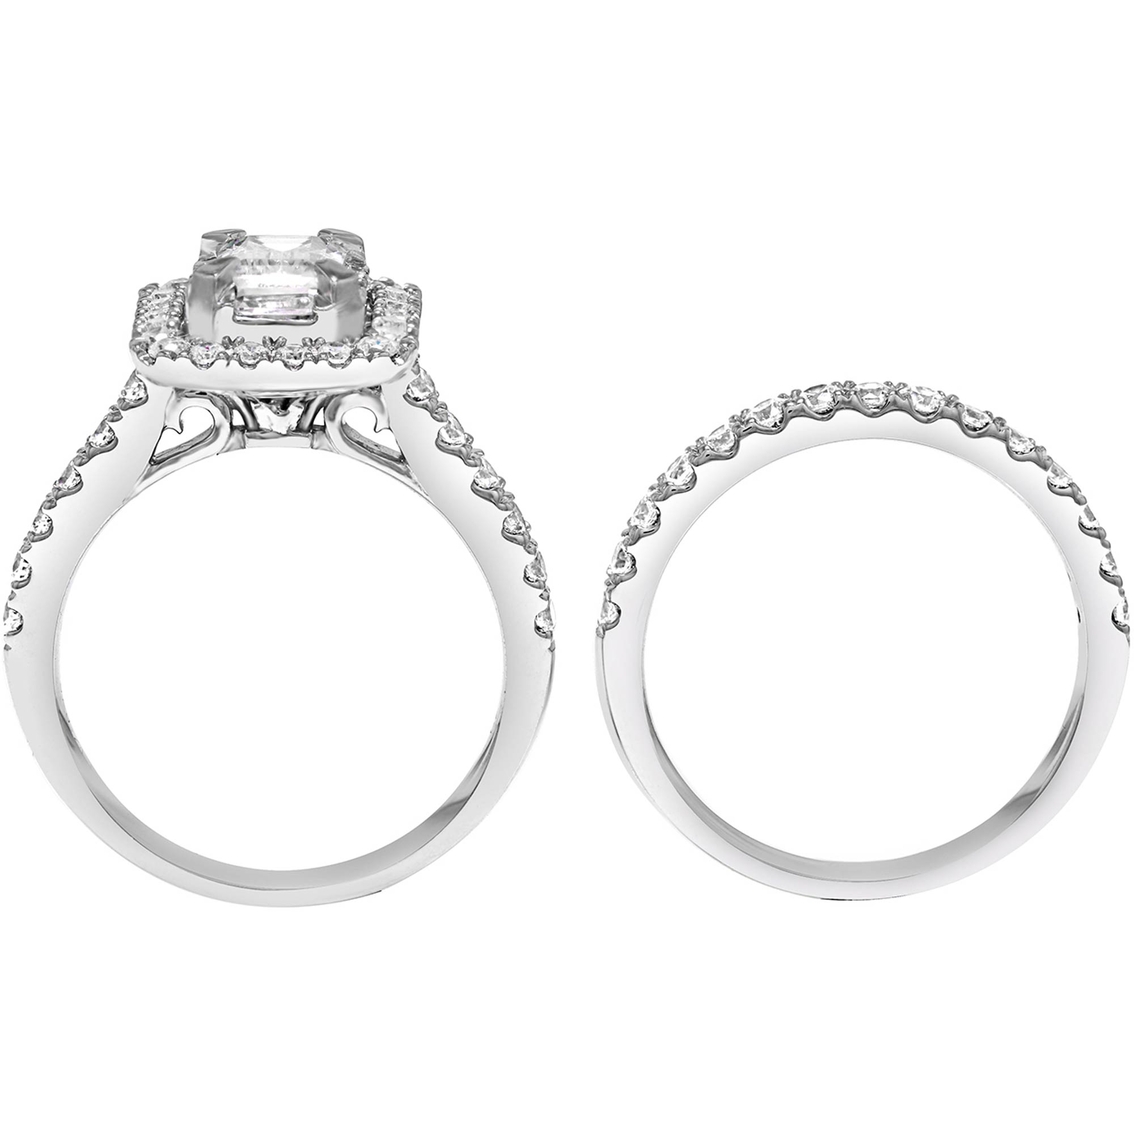 14k White Gold 2 Ctw Emerald Cut Bridal Set Size 7 | Bridal Sets ...